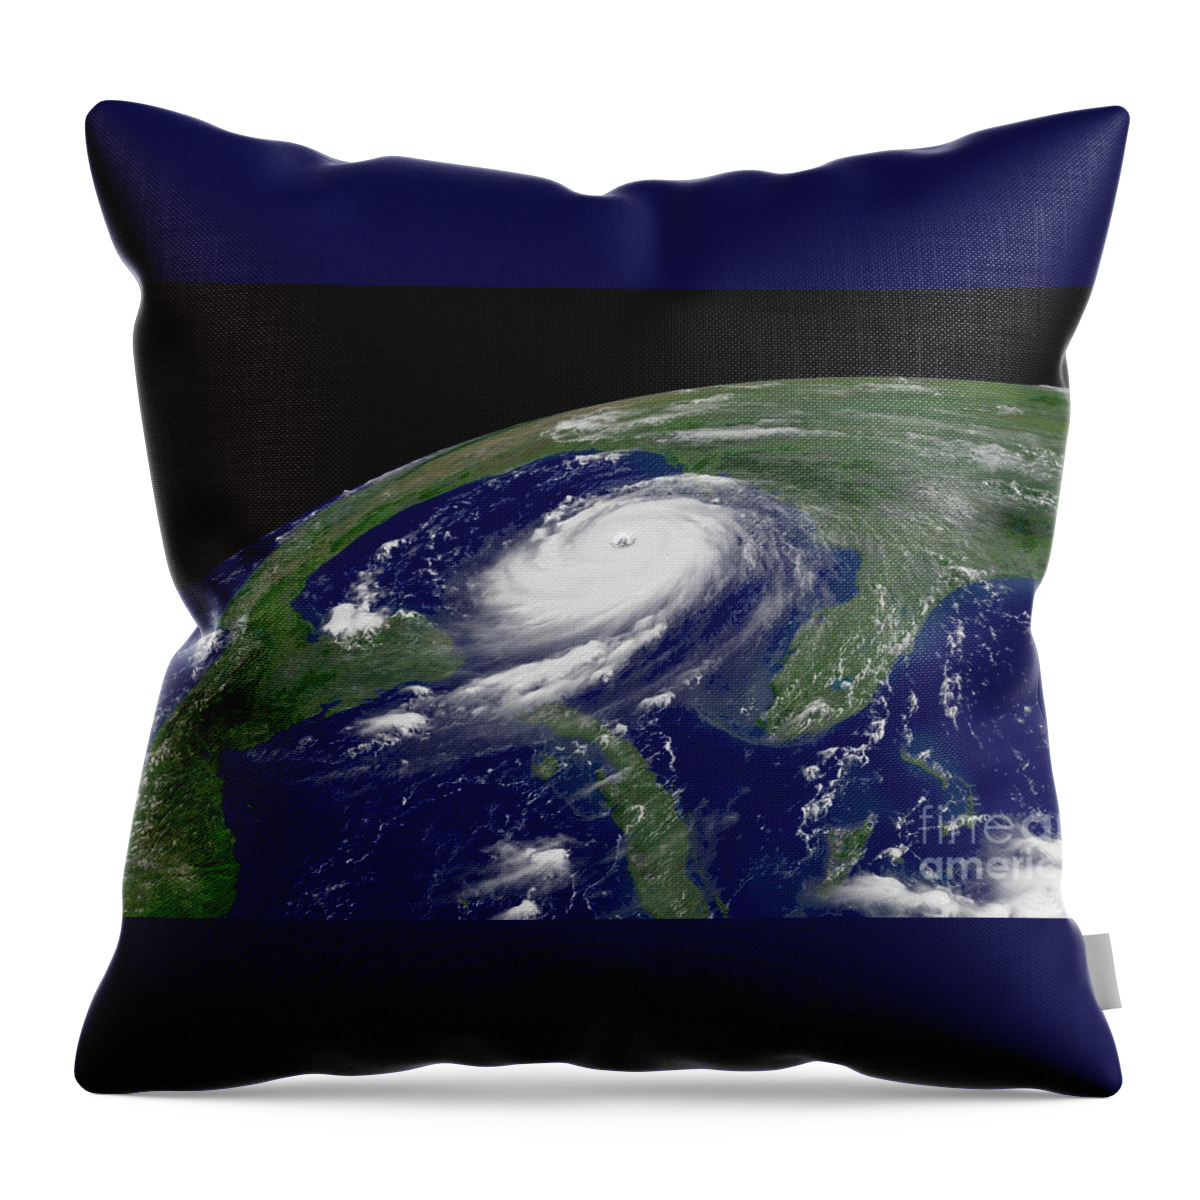 Hurricane Katrina Throw Pillow featuring the photograph Hurricane Katrina by Jon Neidert